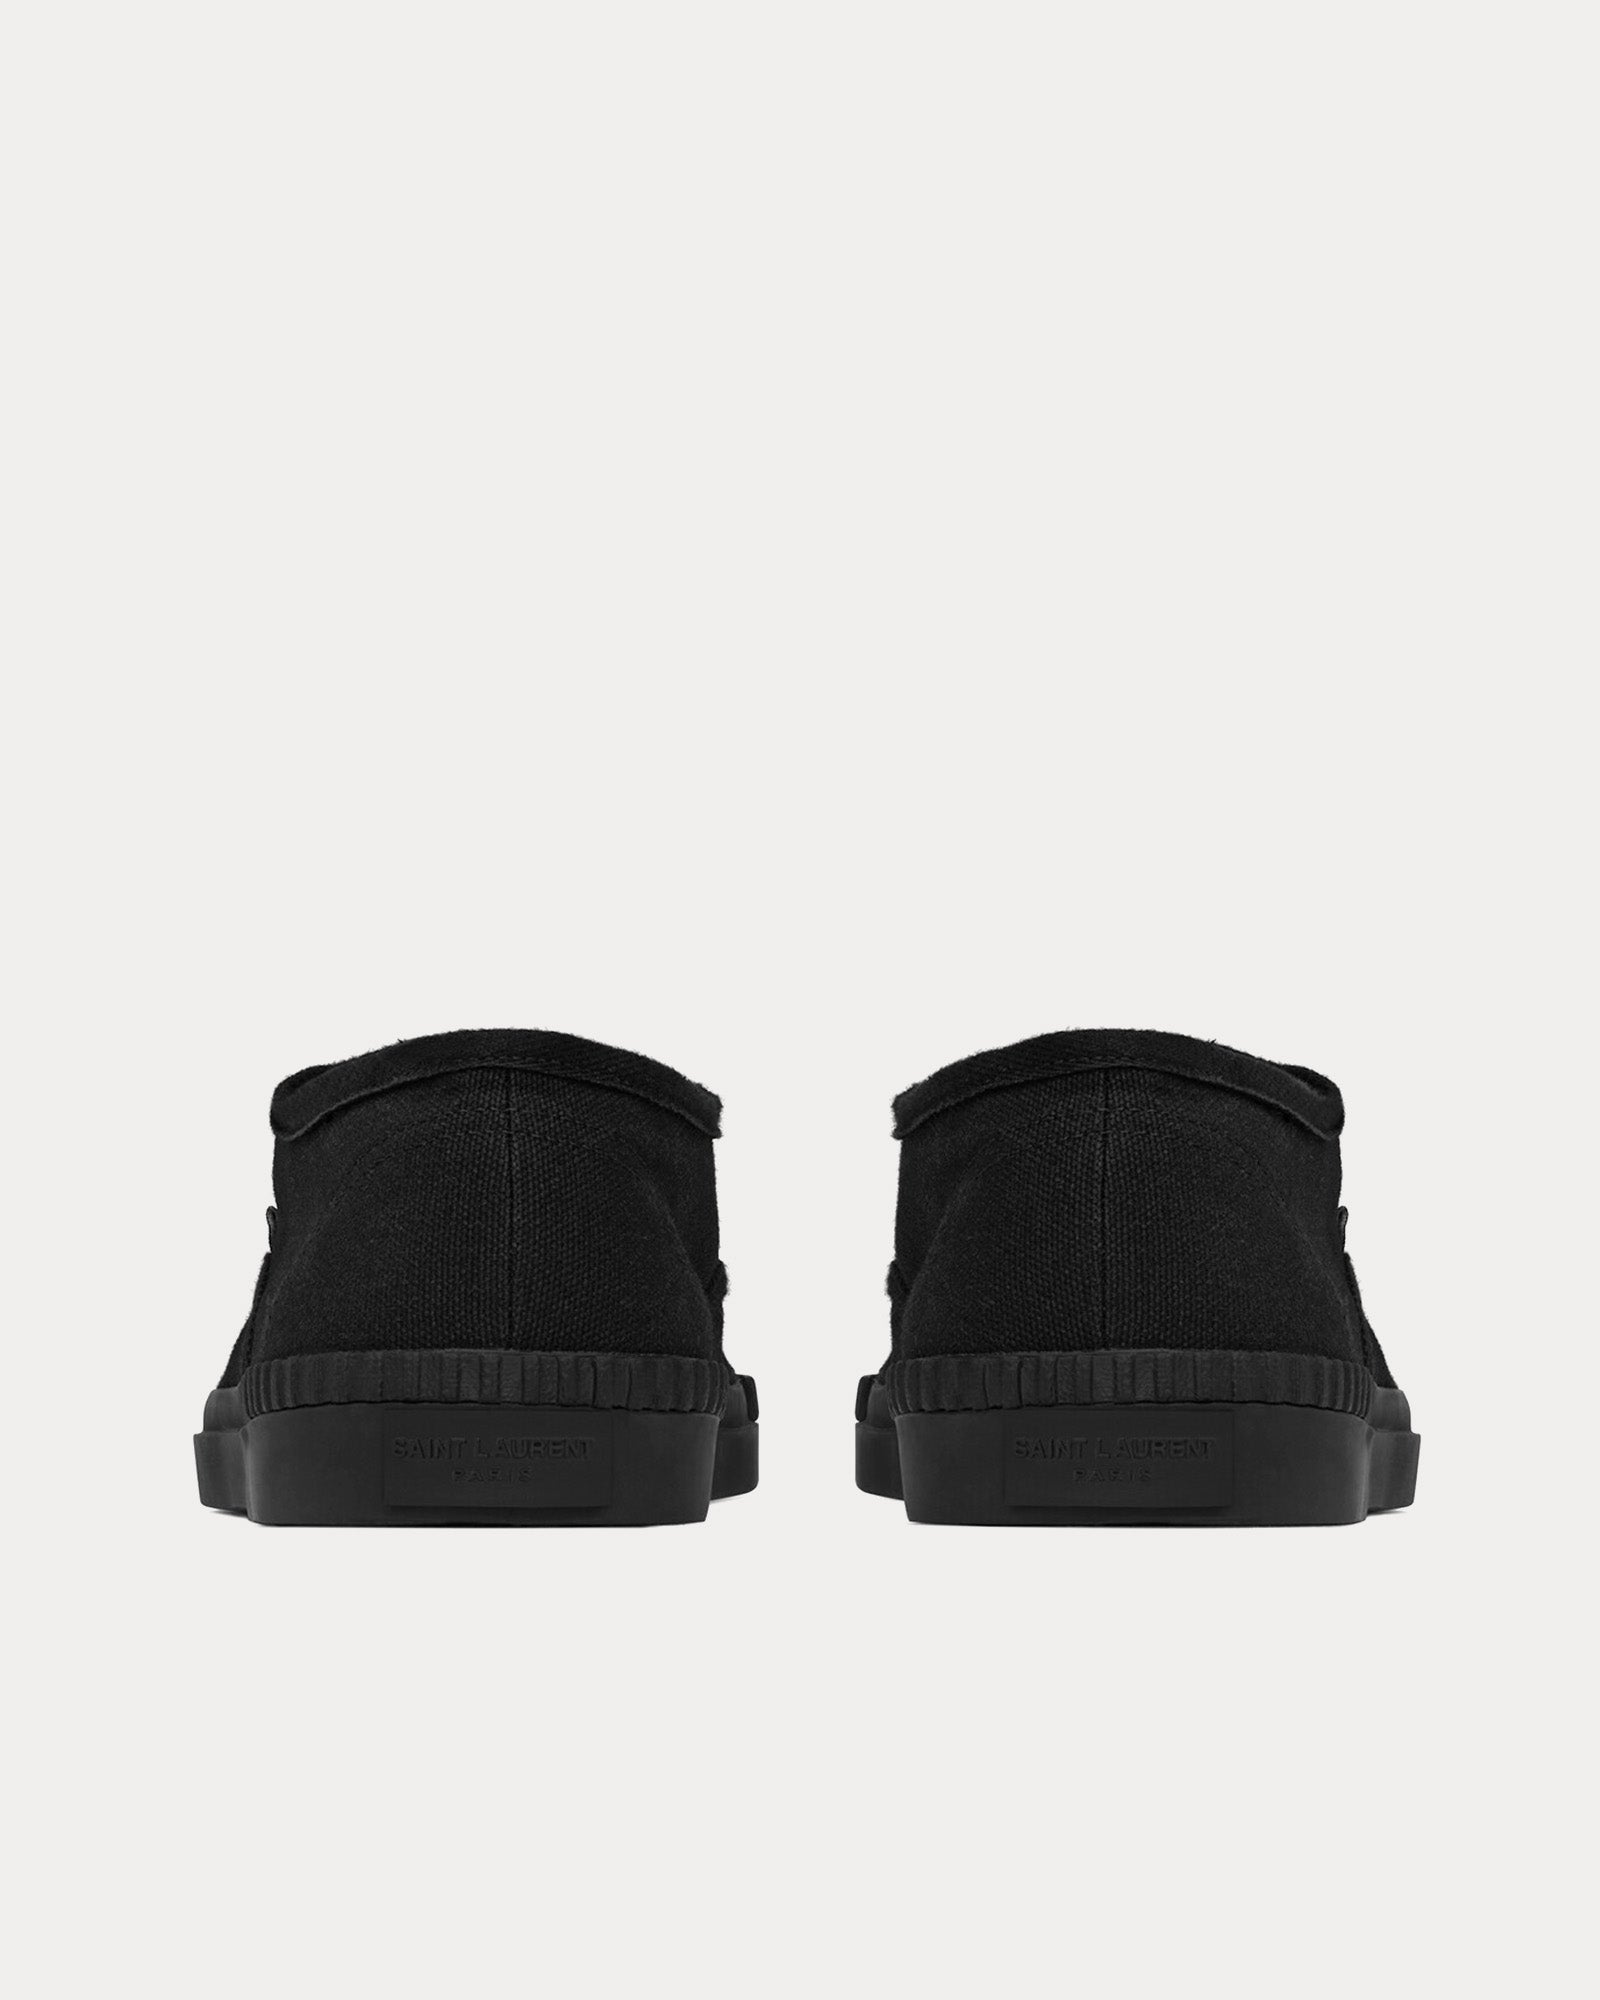 Saint Laurent - Wes Canvas Black Low Top Sneakers